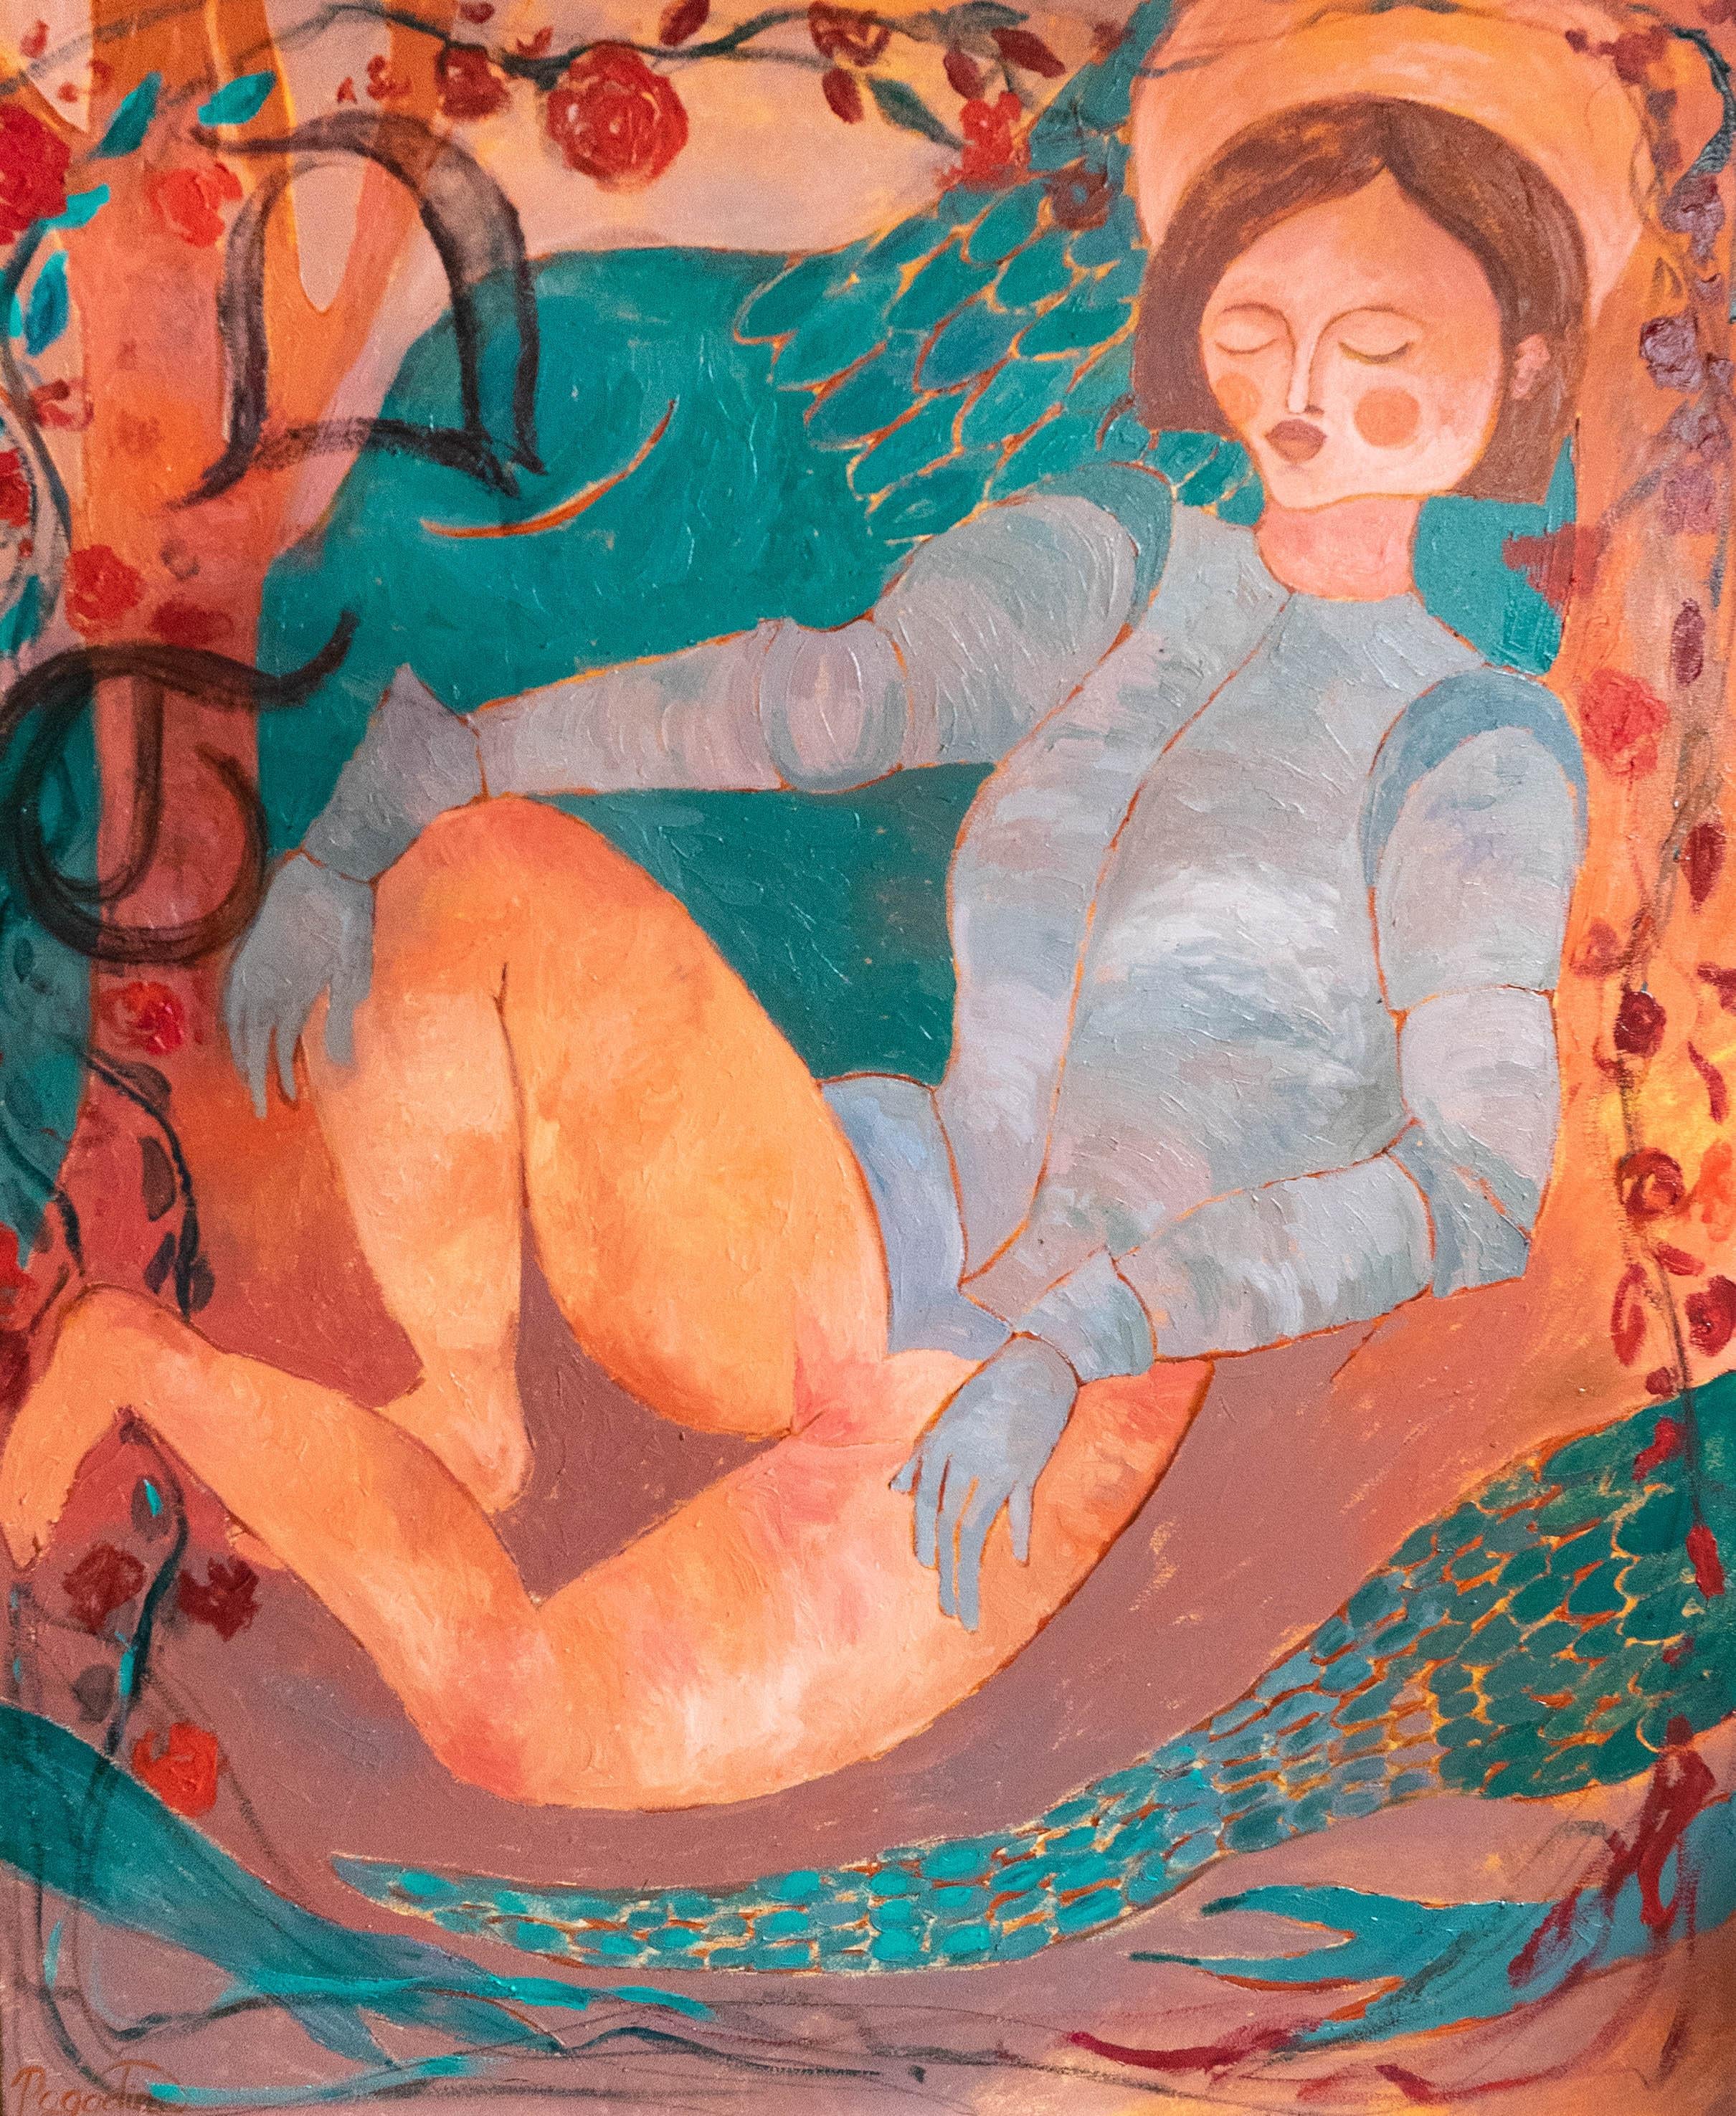 Dasha Pogodina Nude Painting - The battle is inside of me